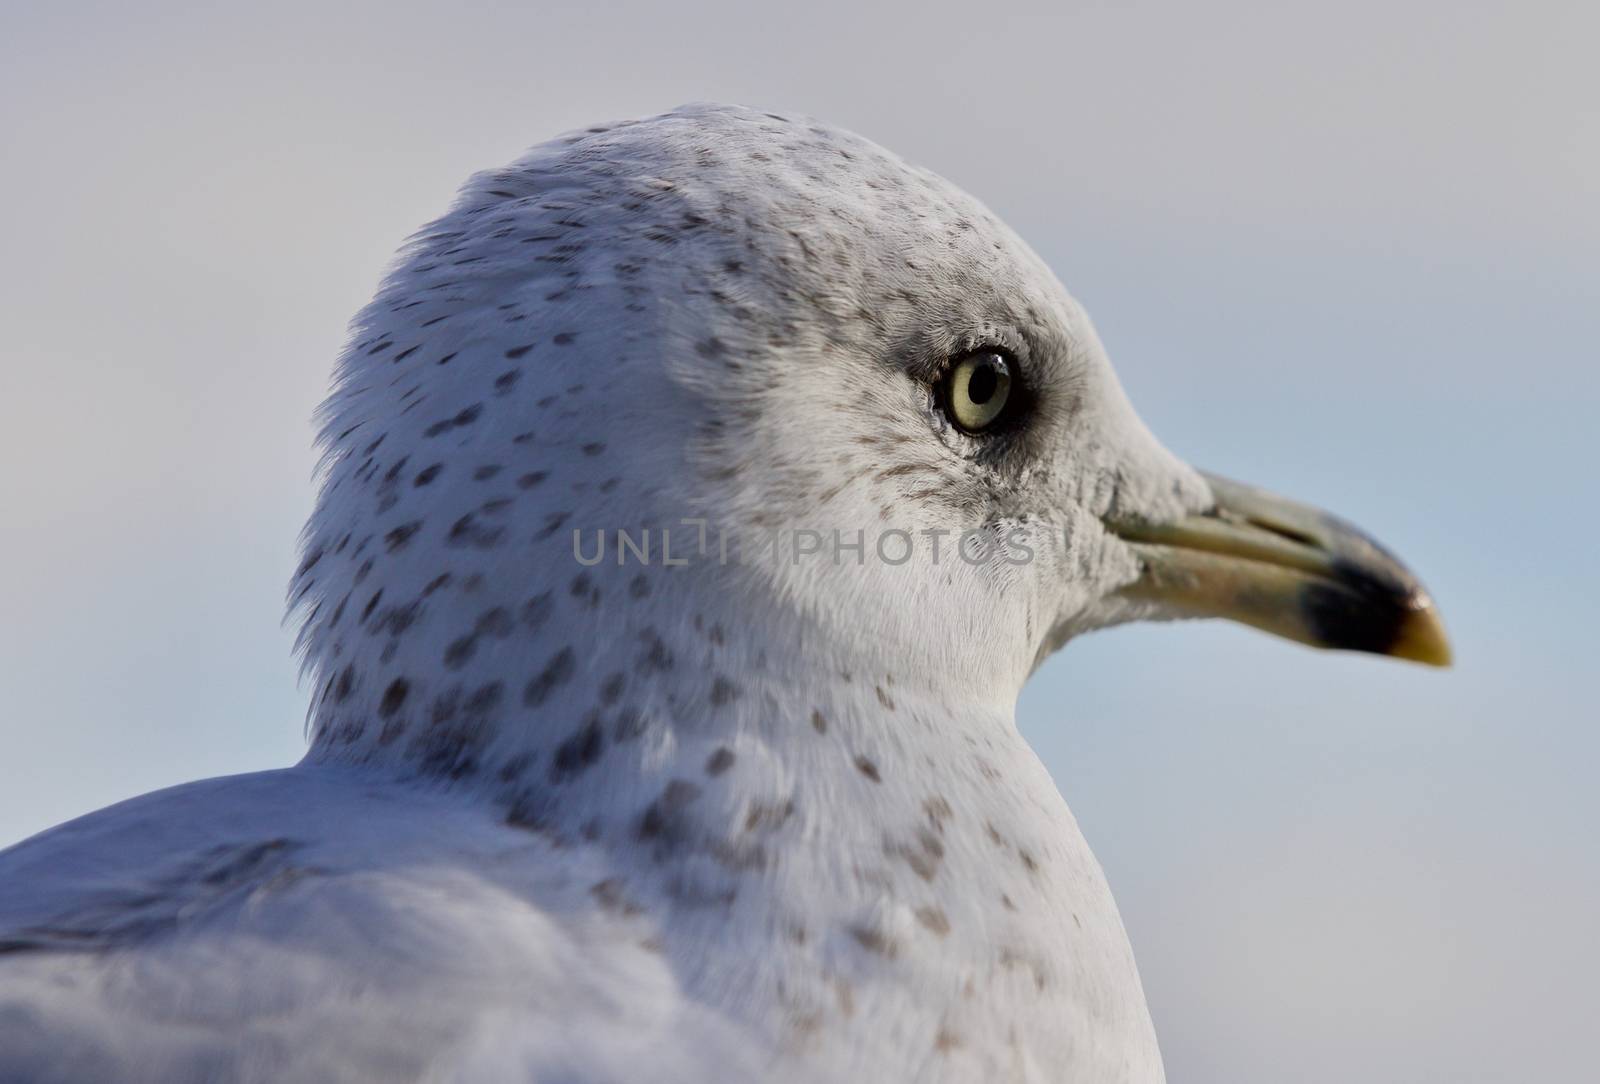 Amazing portrait of a cute calm gull by teo